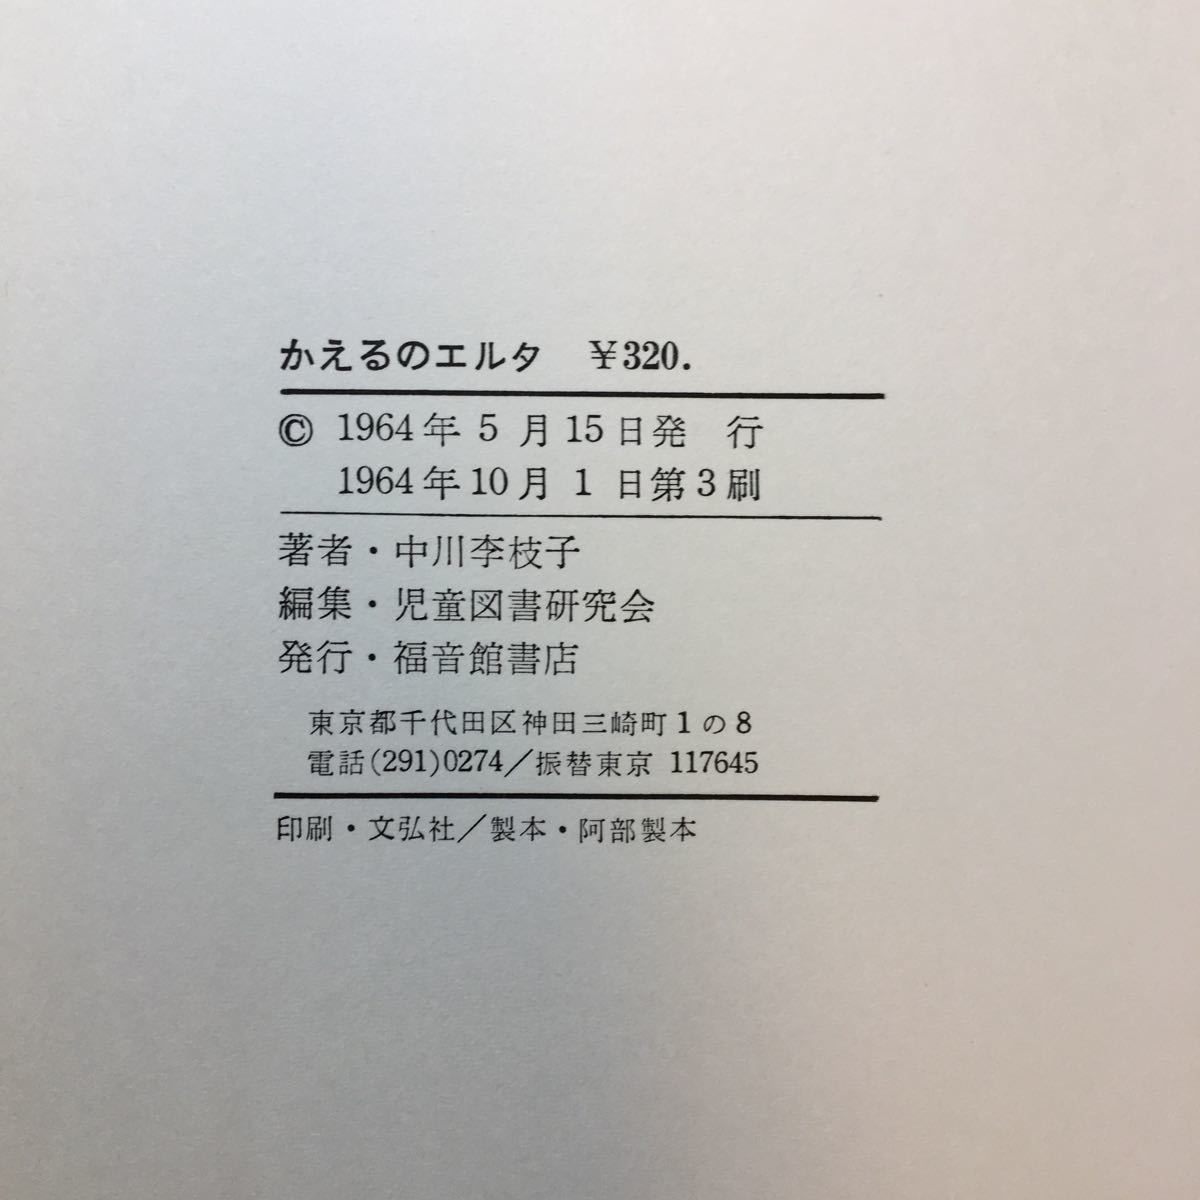 zaa-261♪かえるのエルタ 　中川李枝子(作)　福音館書店1964/10/1